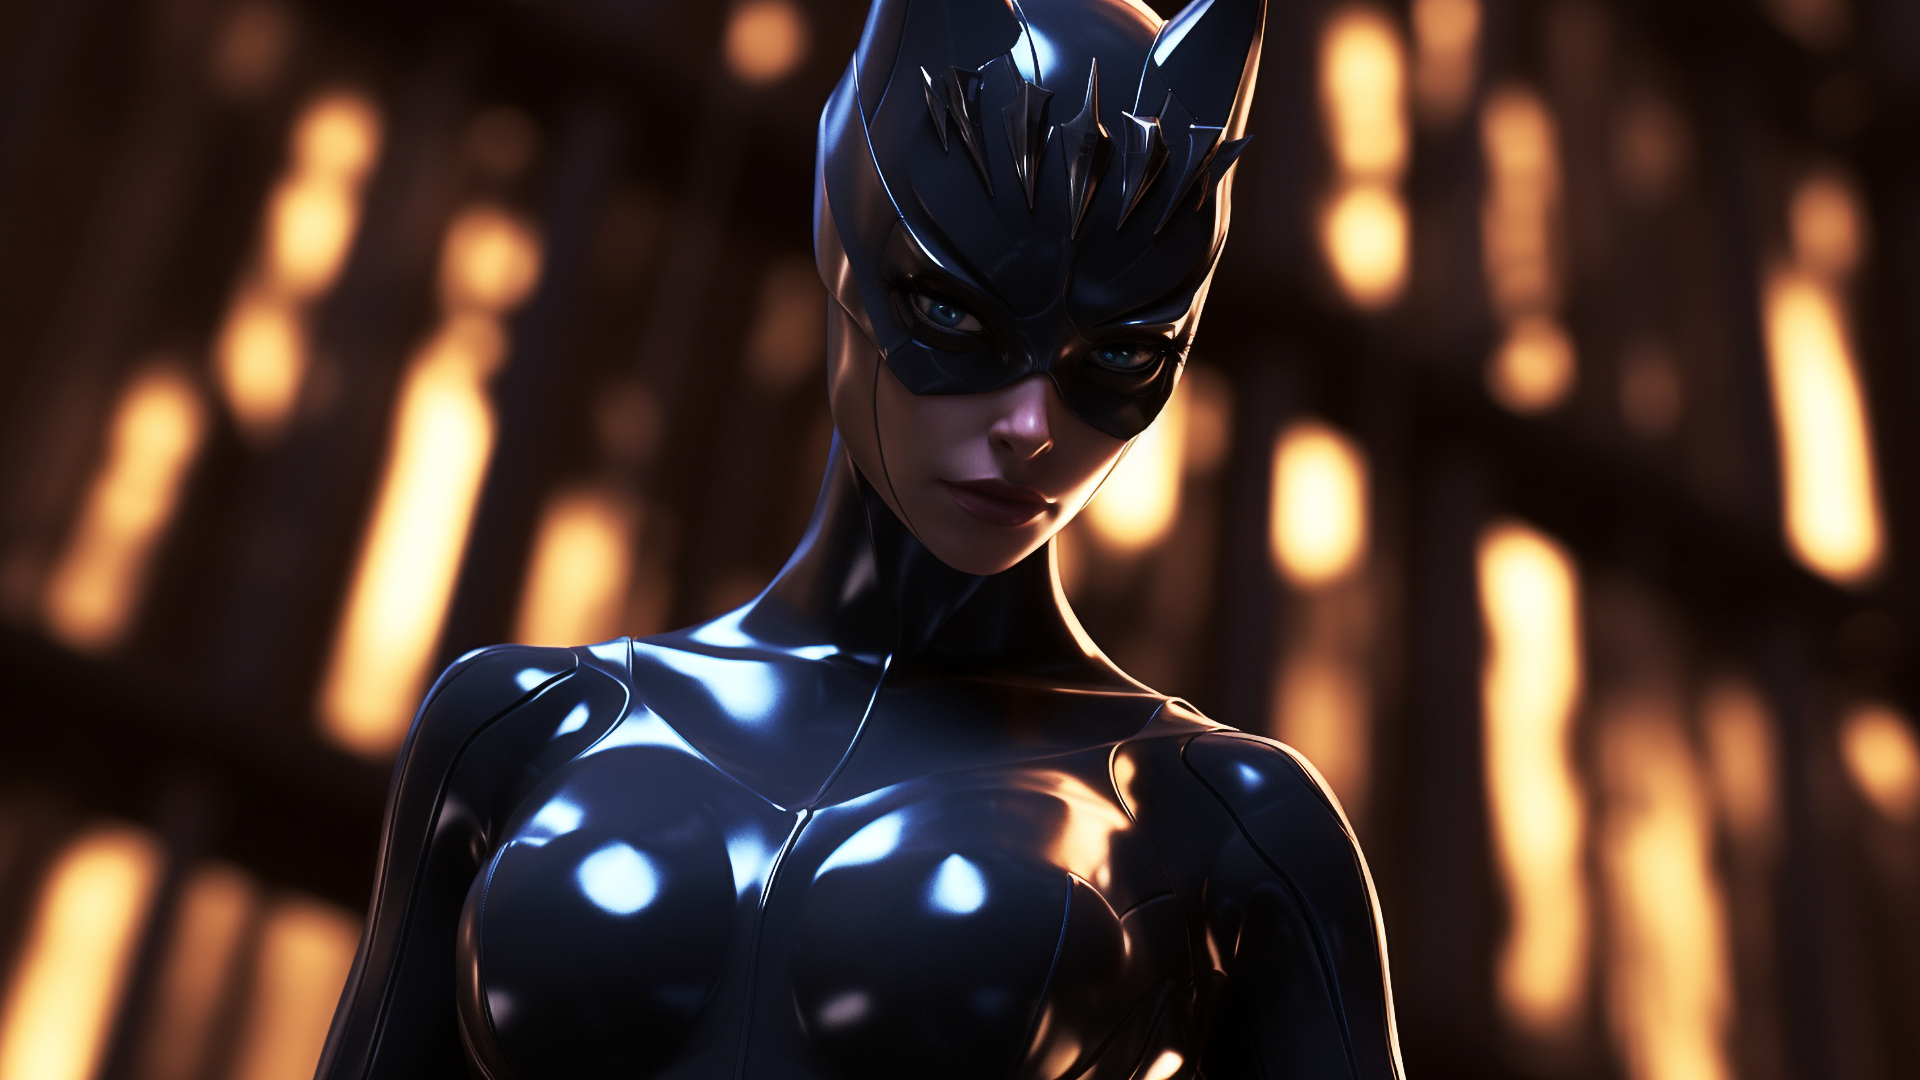 General 1920x1080 AI art women DC Comics Catwoman blurred blurry background bodysuit digital art villains looking at viewer mask